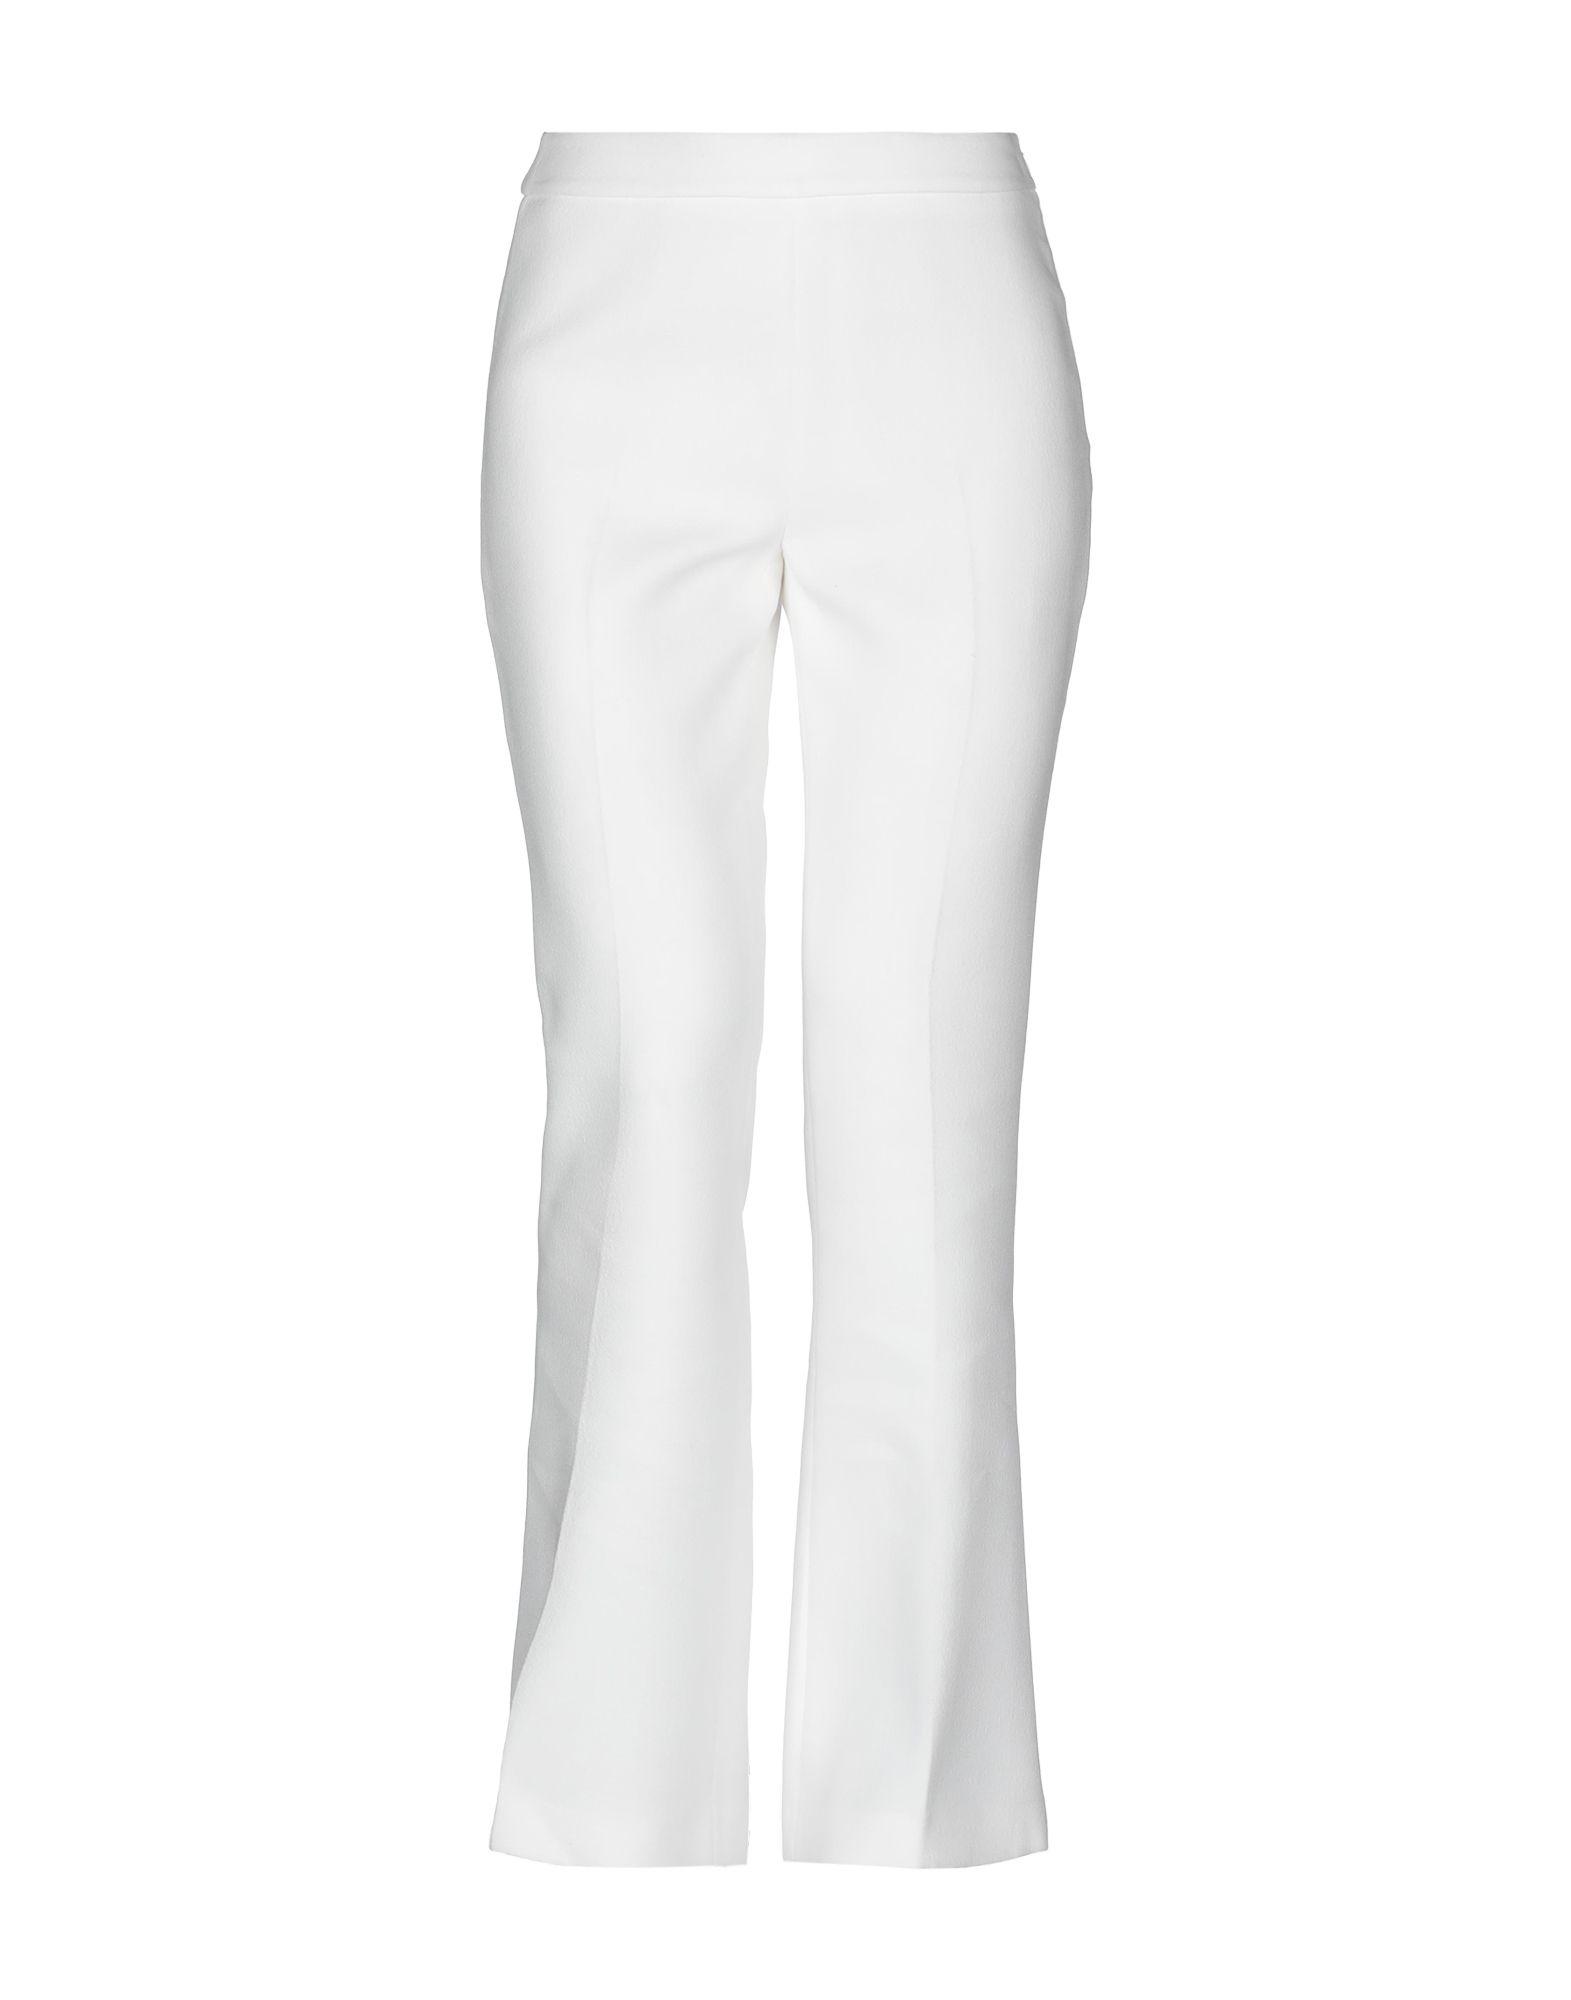 Giambattista Valli Cotton Casual Pants in White - Lyst